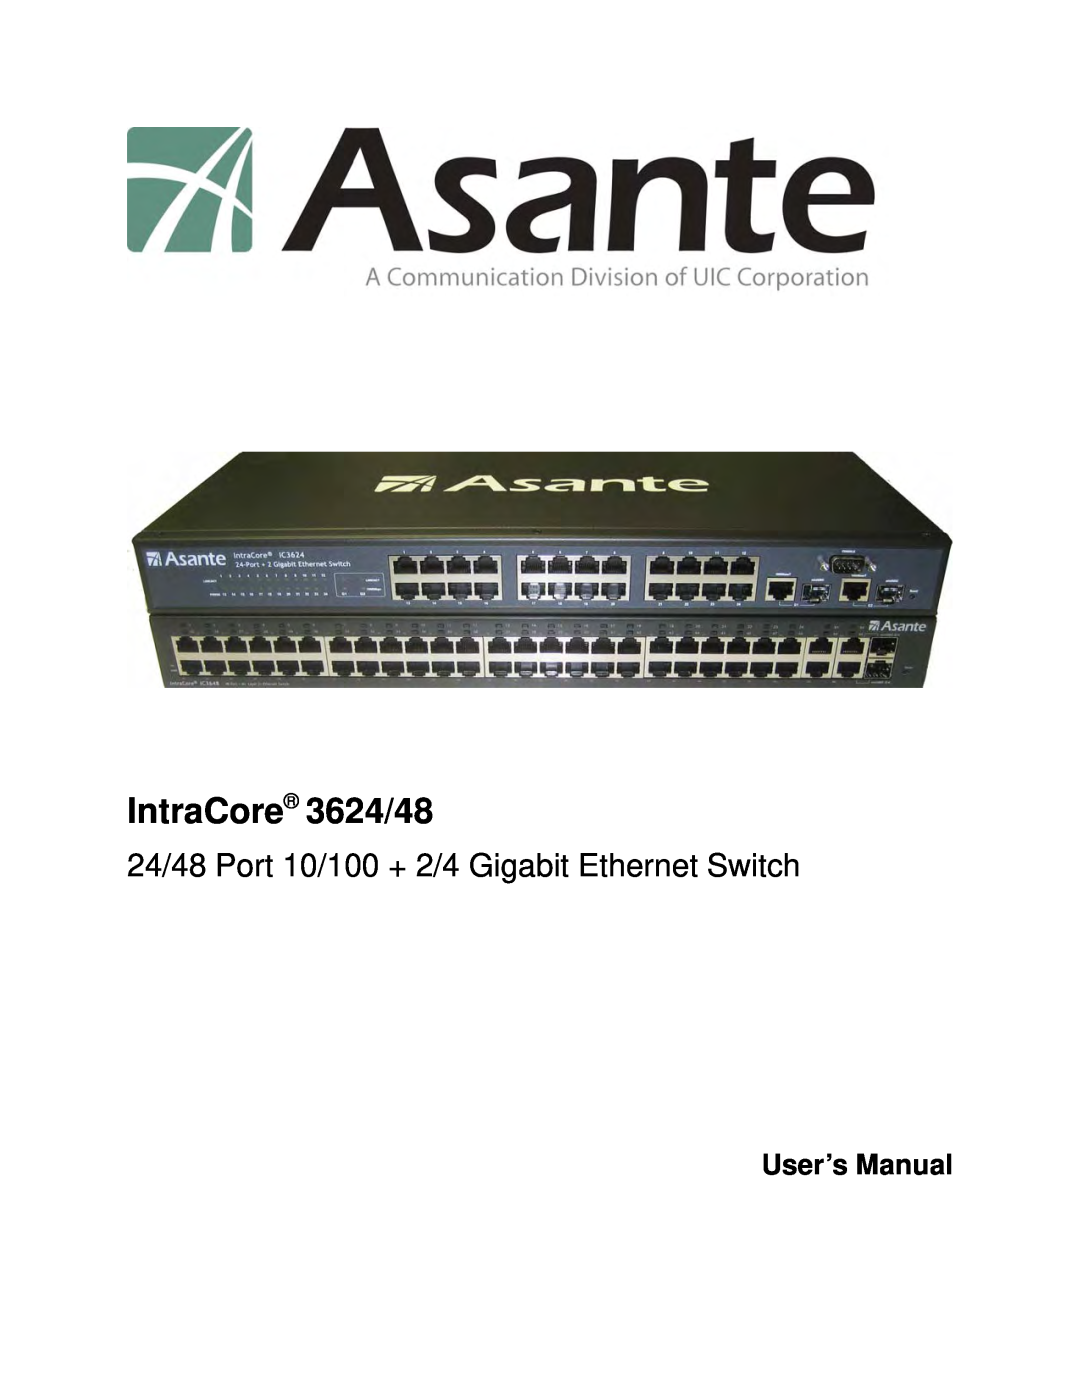 Asante Technologies user manual User’s Manual, IntraCore 3624/48, 24/48 Port 10/100 + 2/4 Gigabit Ethernet Switch 